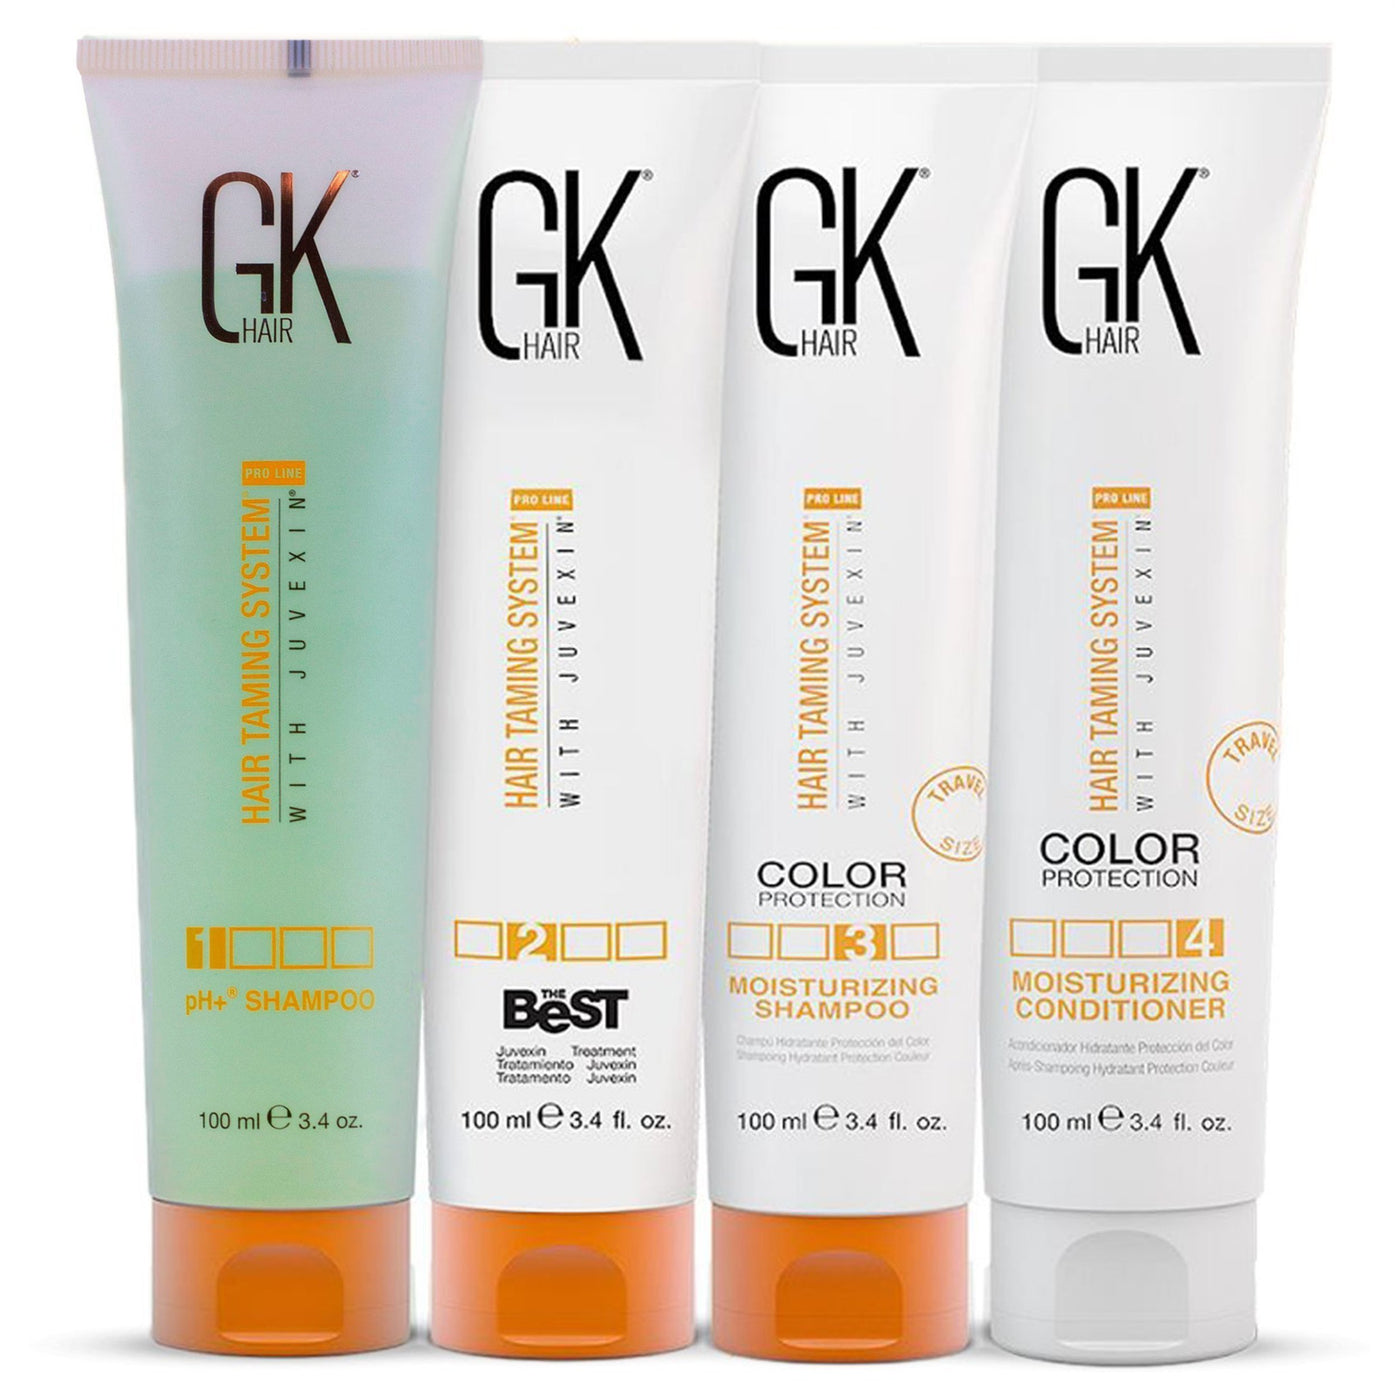 the best hair treatment kit - GK Hair Eu